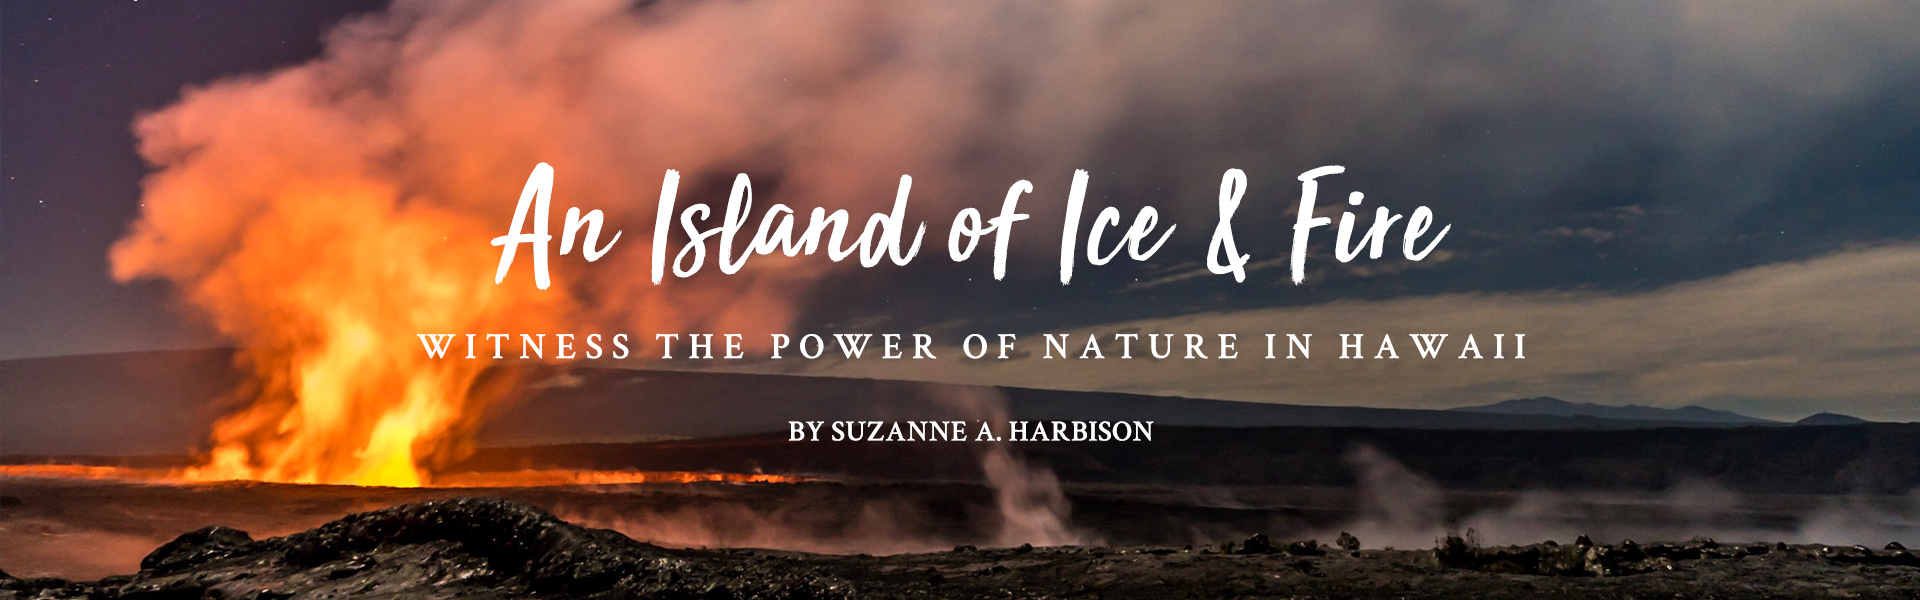 An Island of Ice & Fire